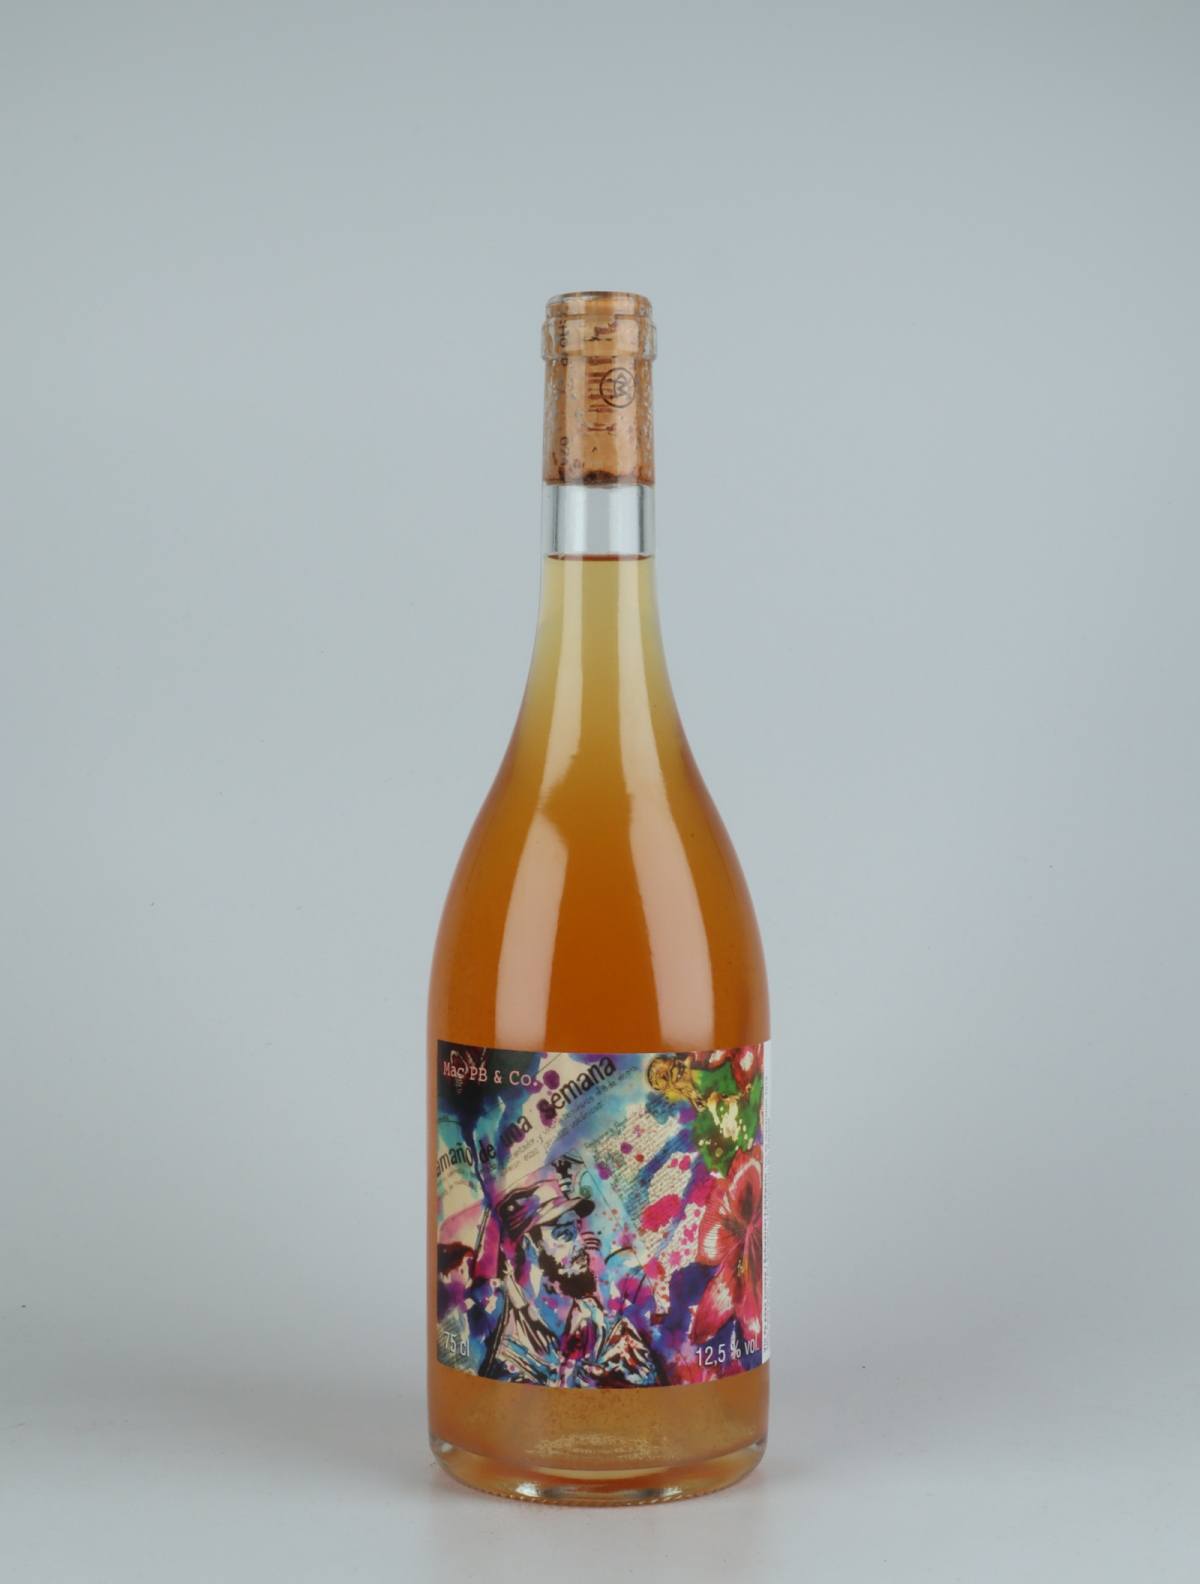 A bottle 2019 Mac PB & Co. Orange wine from Les Vins du Fab, Neuchâtel in 